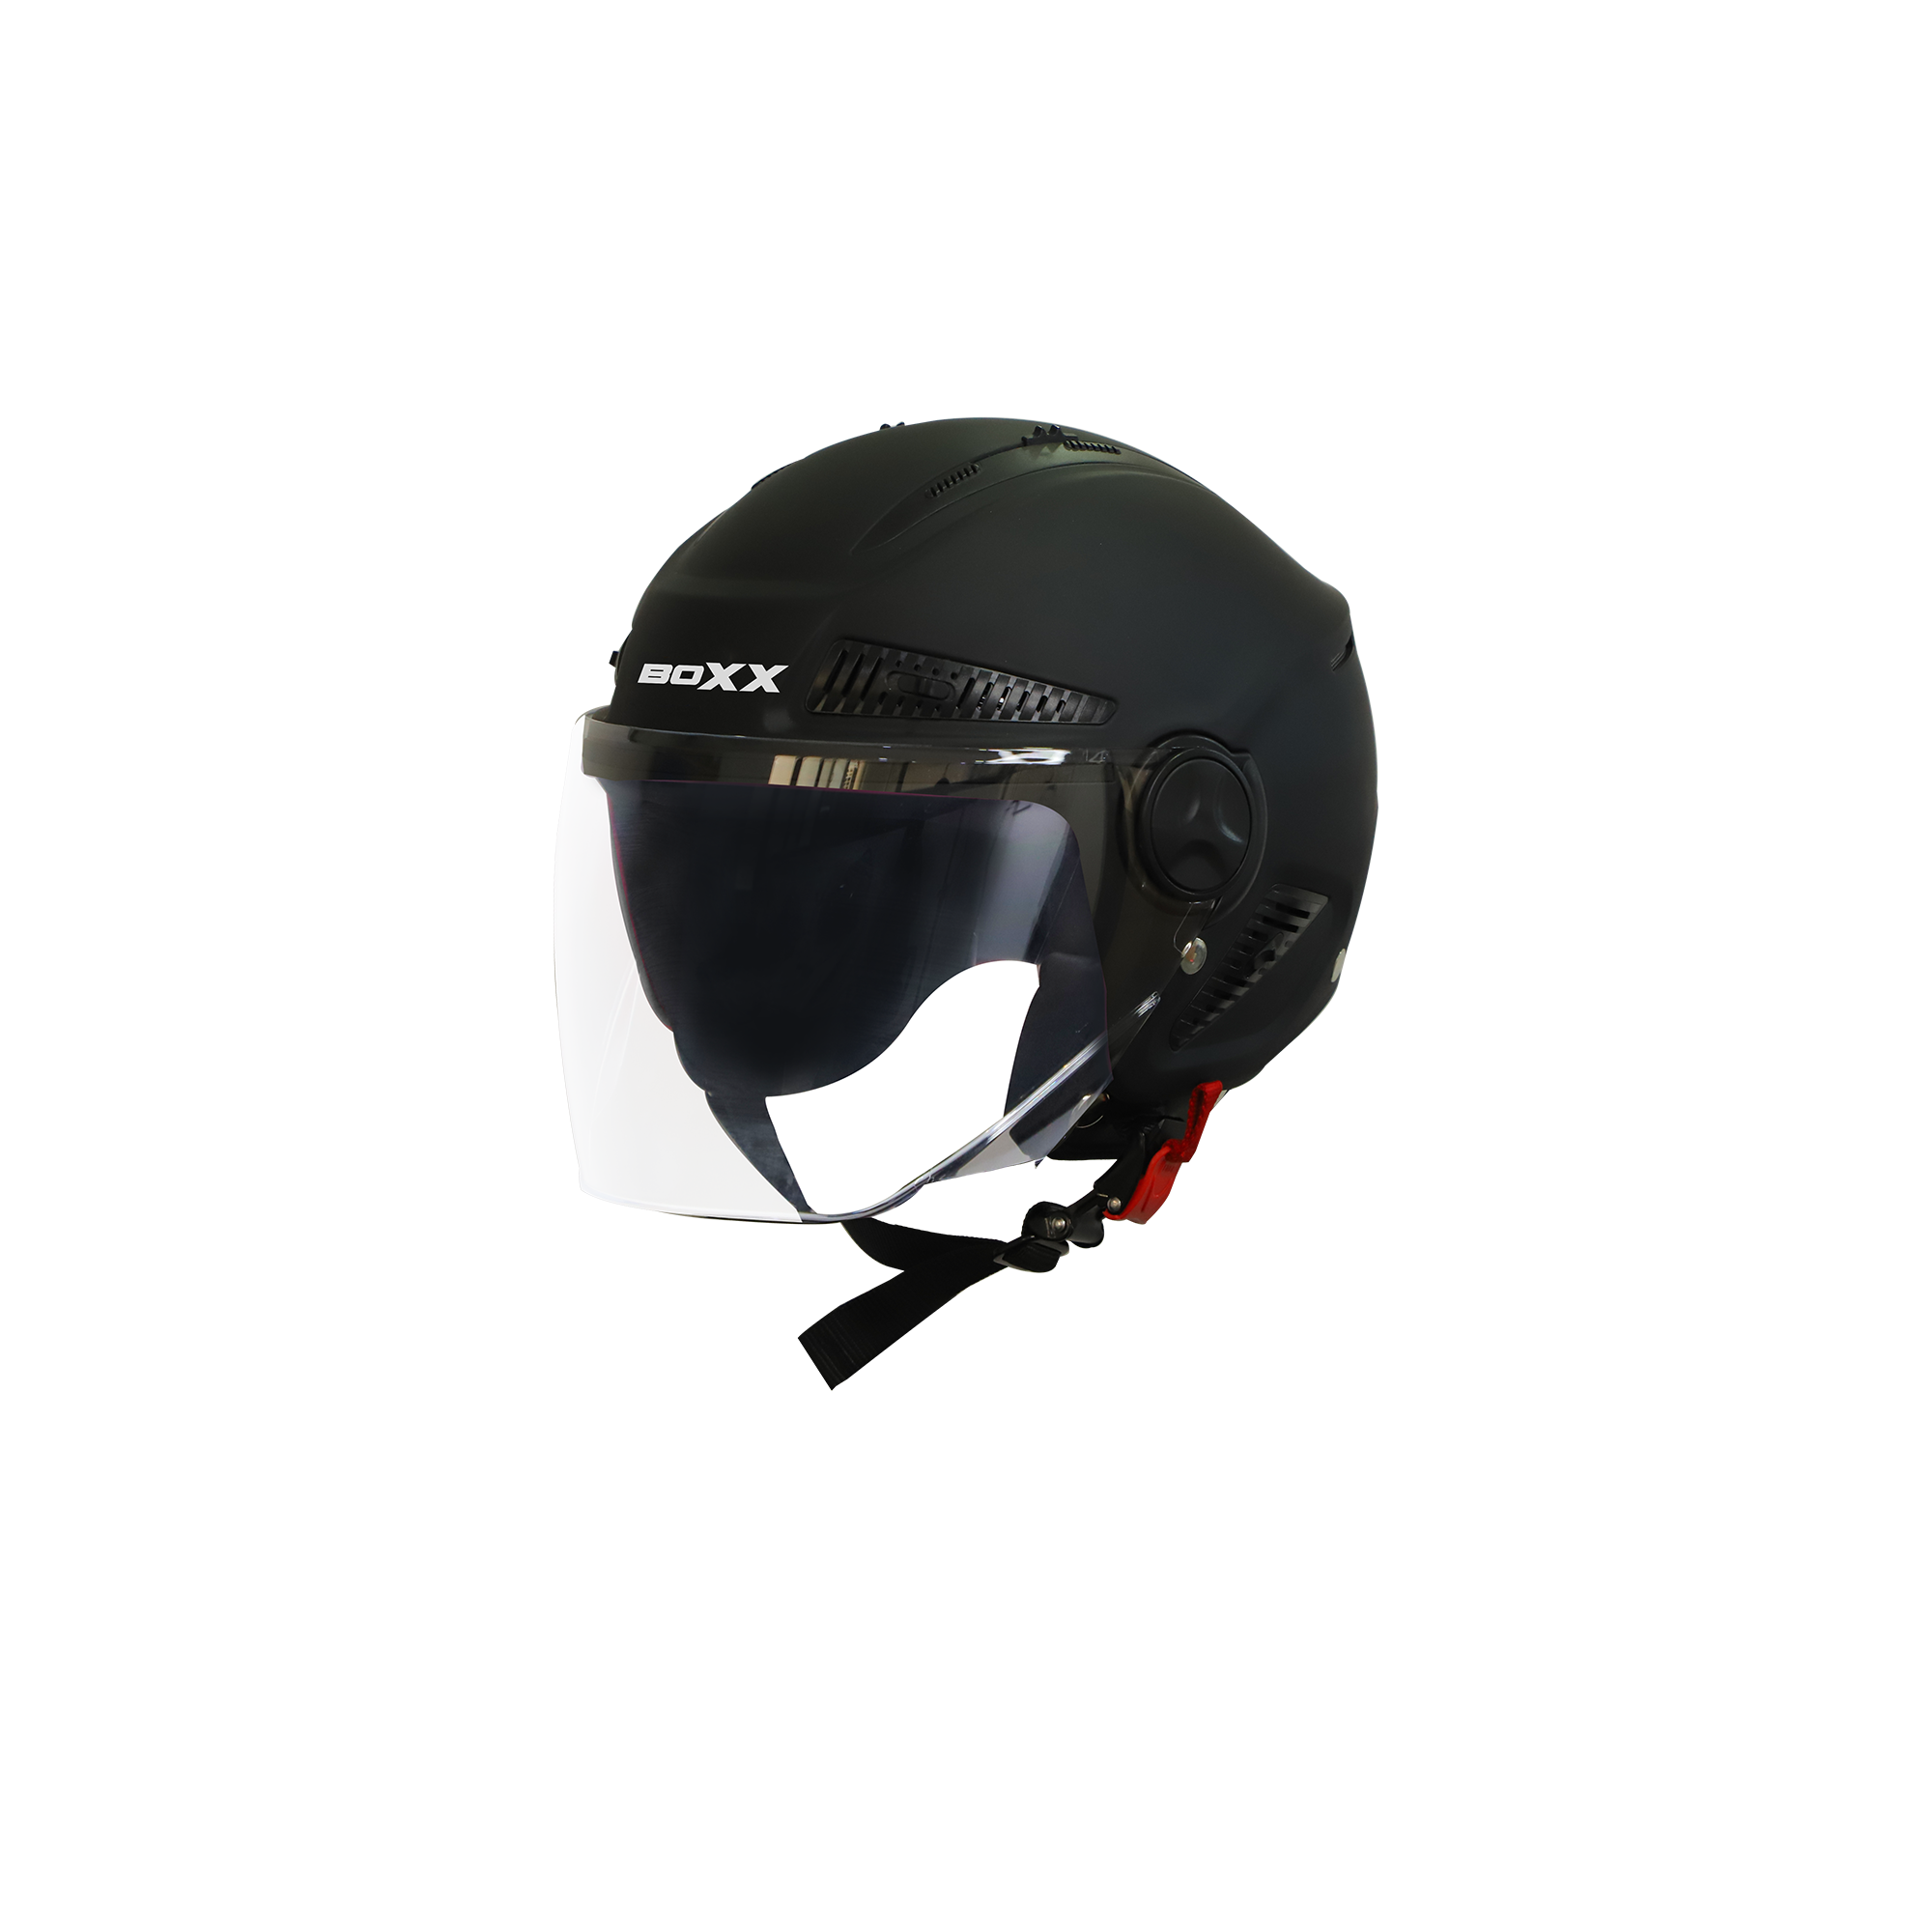 Steelbird SBH-24 Boxx ISI Certified Open Face Helmet For Men And Women (Matt Black With Clear Visor)